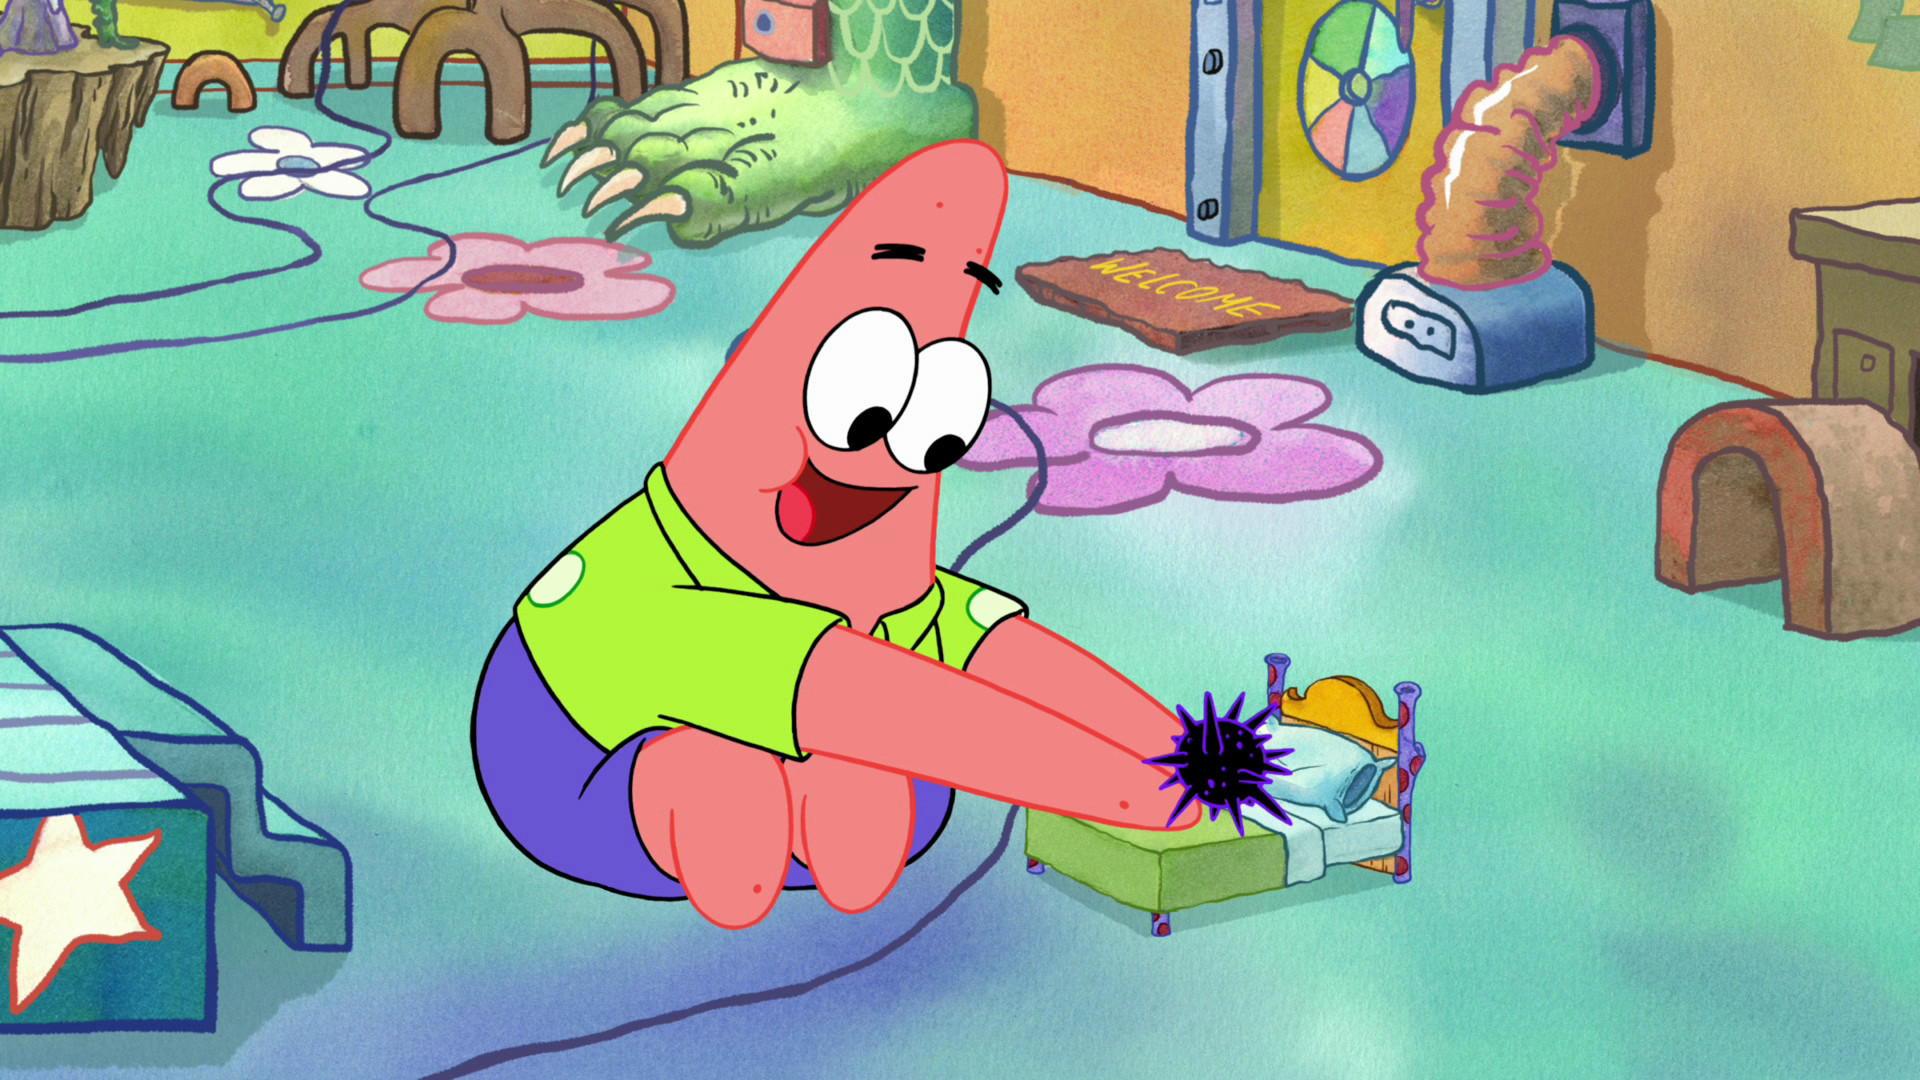 Patrick show